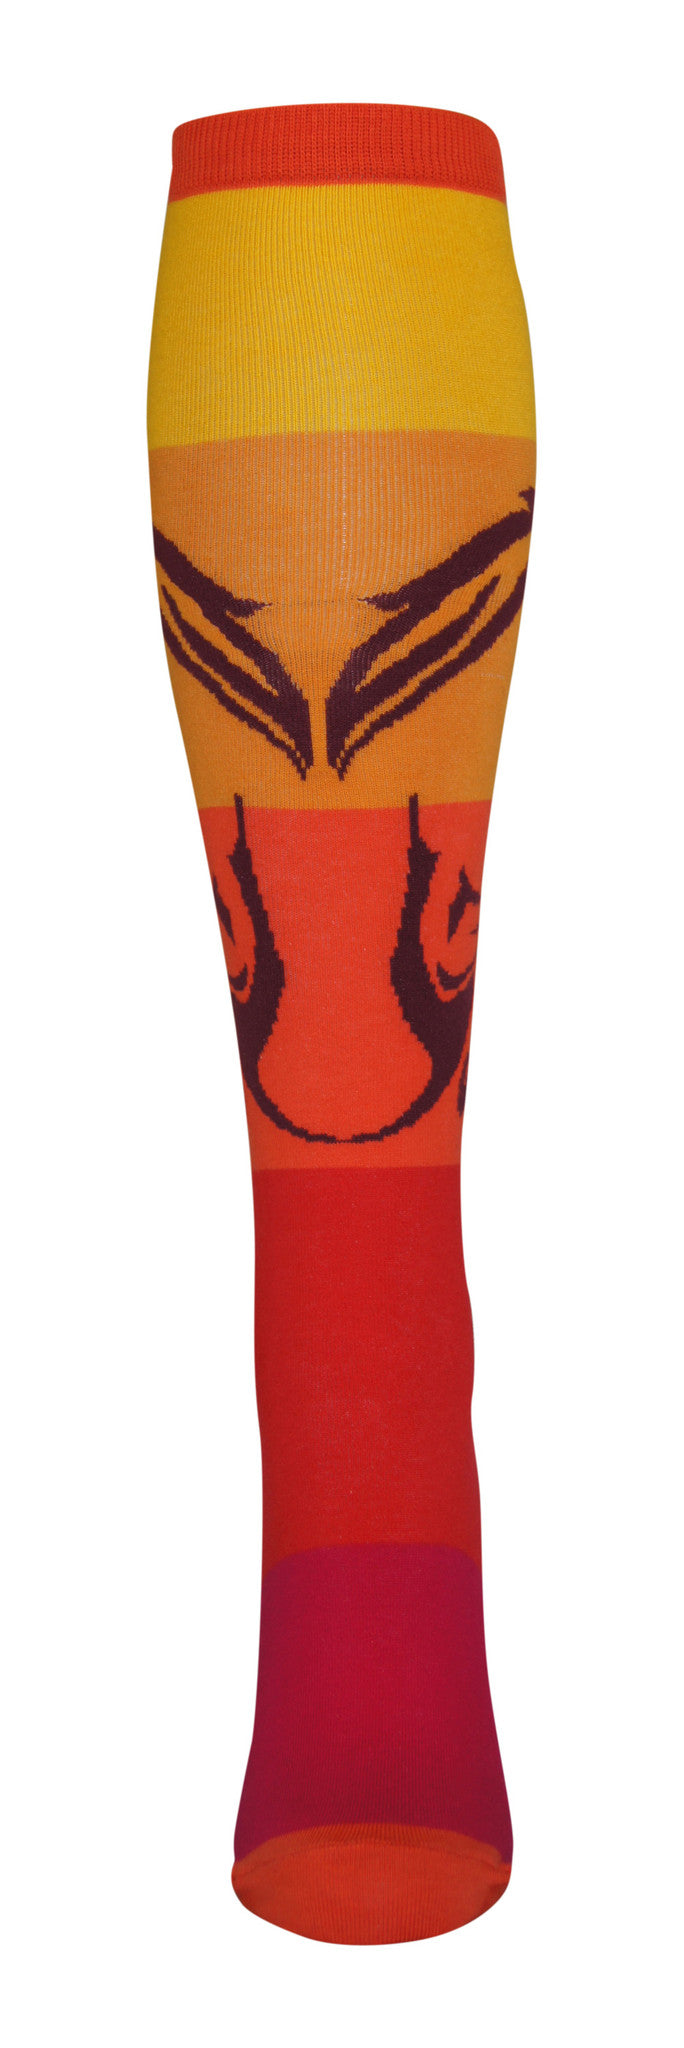 "Sunset Jumper" cotton-rich knee sock from lucky7socks.com